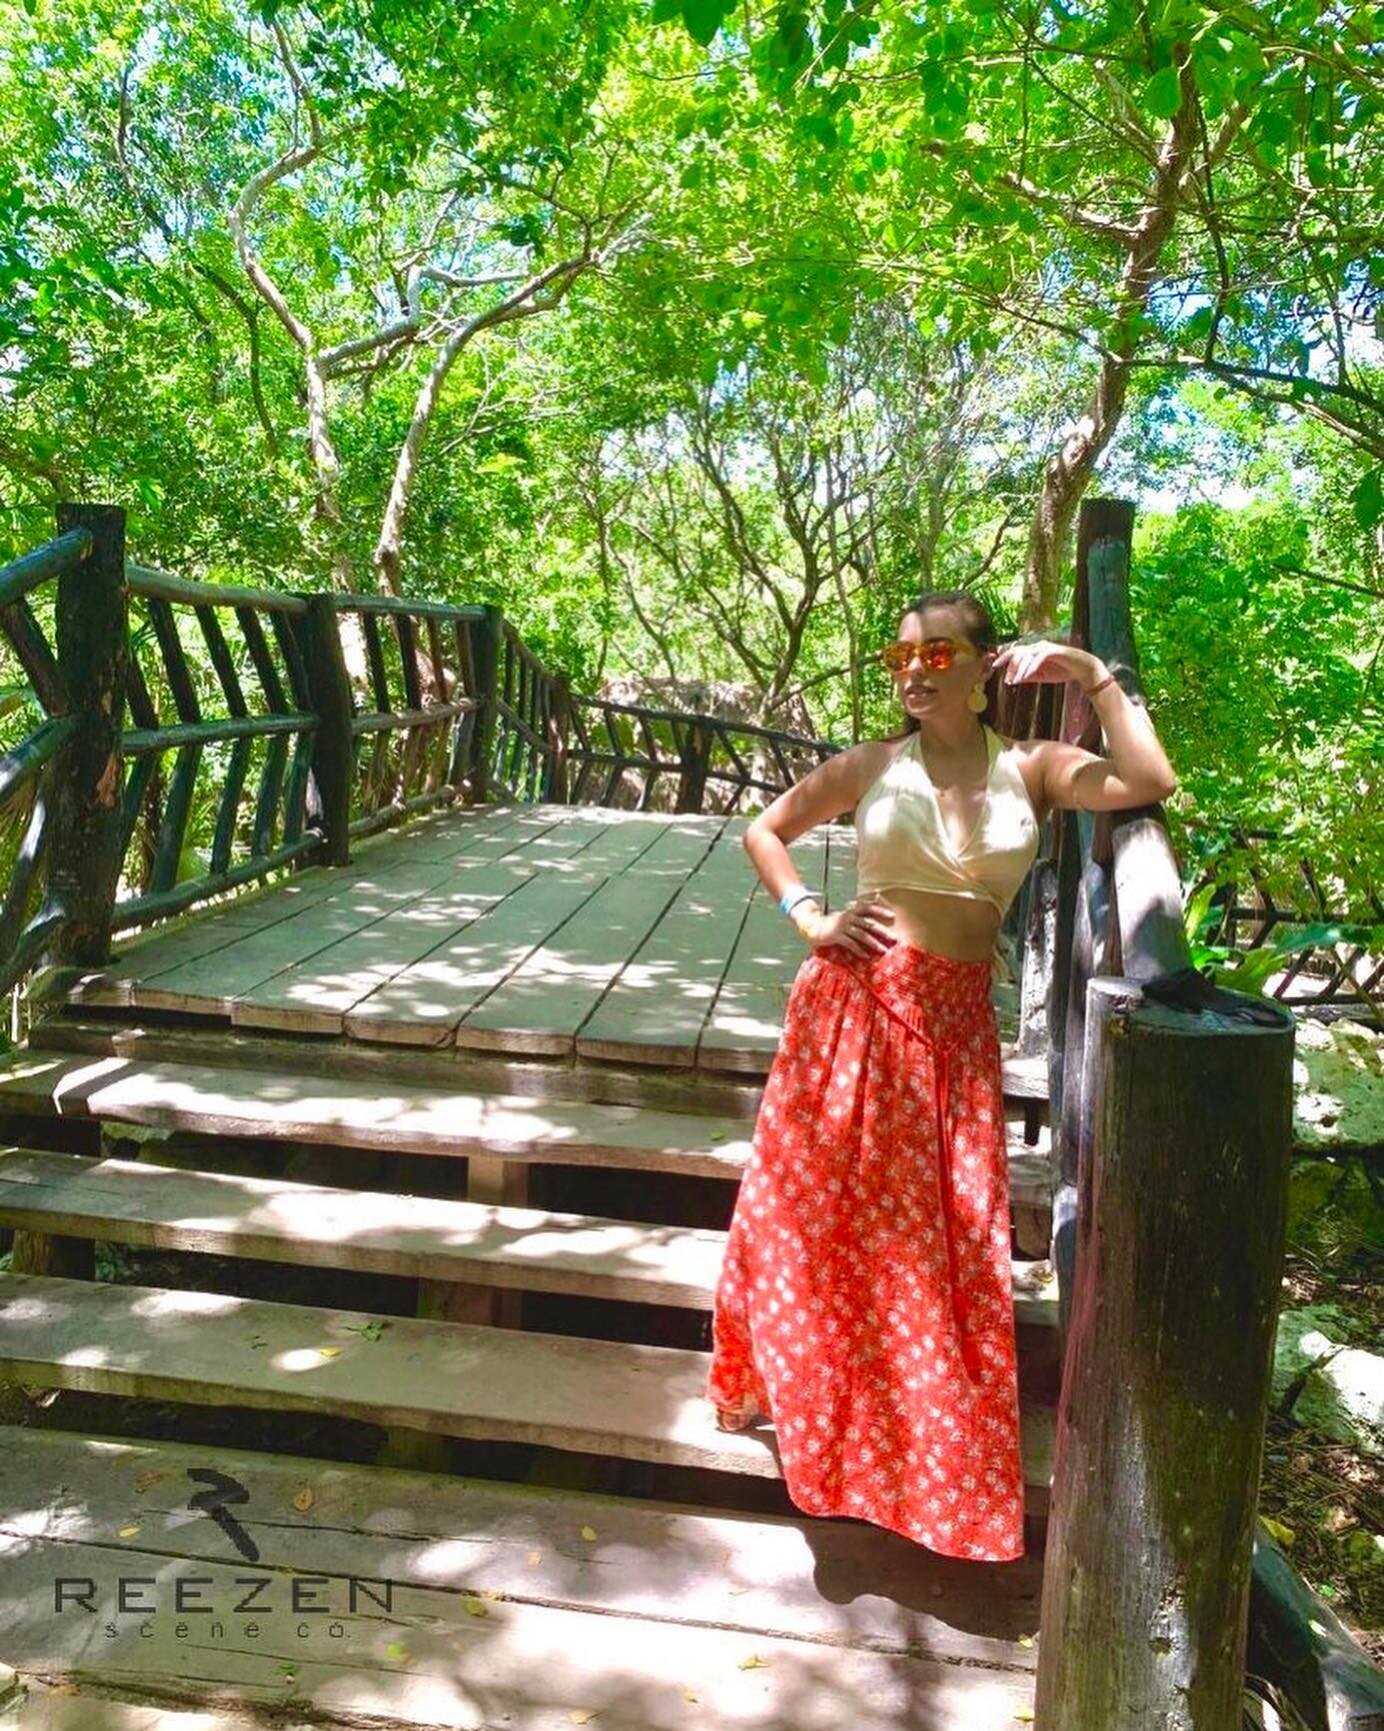 Cross the bridge, the journey is beautiful...

Featured:
KAI (one Love) frame
Polarized Sunglass

Shop now @ reezensceneco.com

#bridge #nature #enjoylife #onelove #polarized #lifestyle #fashion #blogger #travel #cancun #mexico #ambassador #must-have